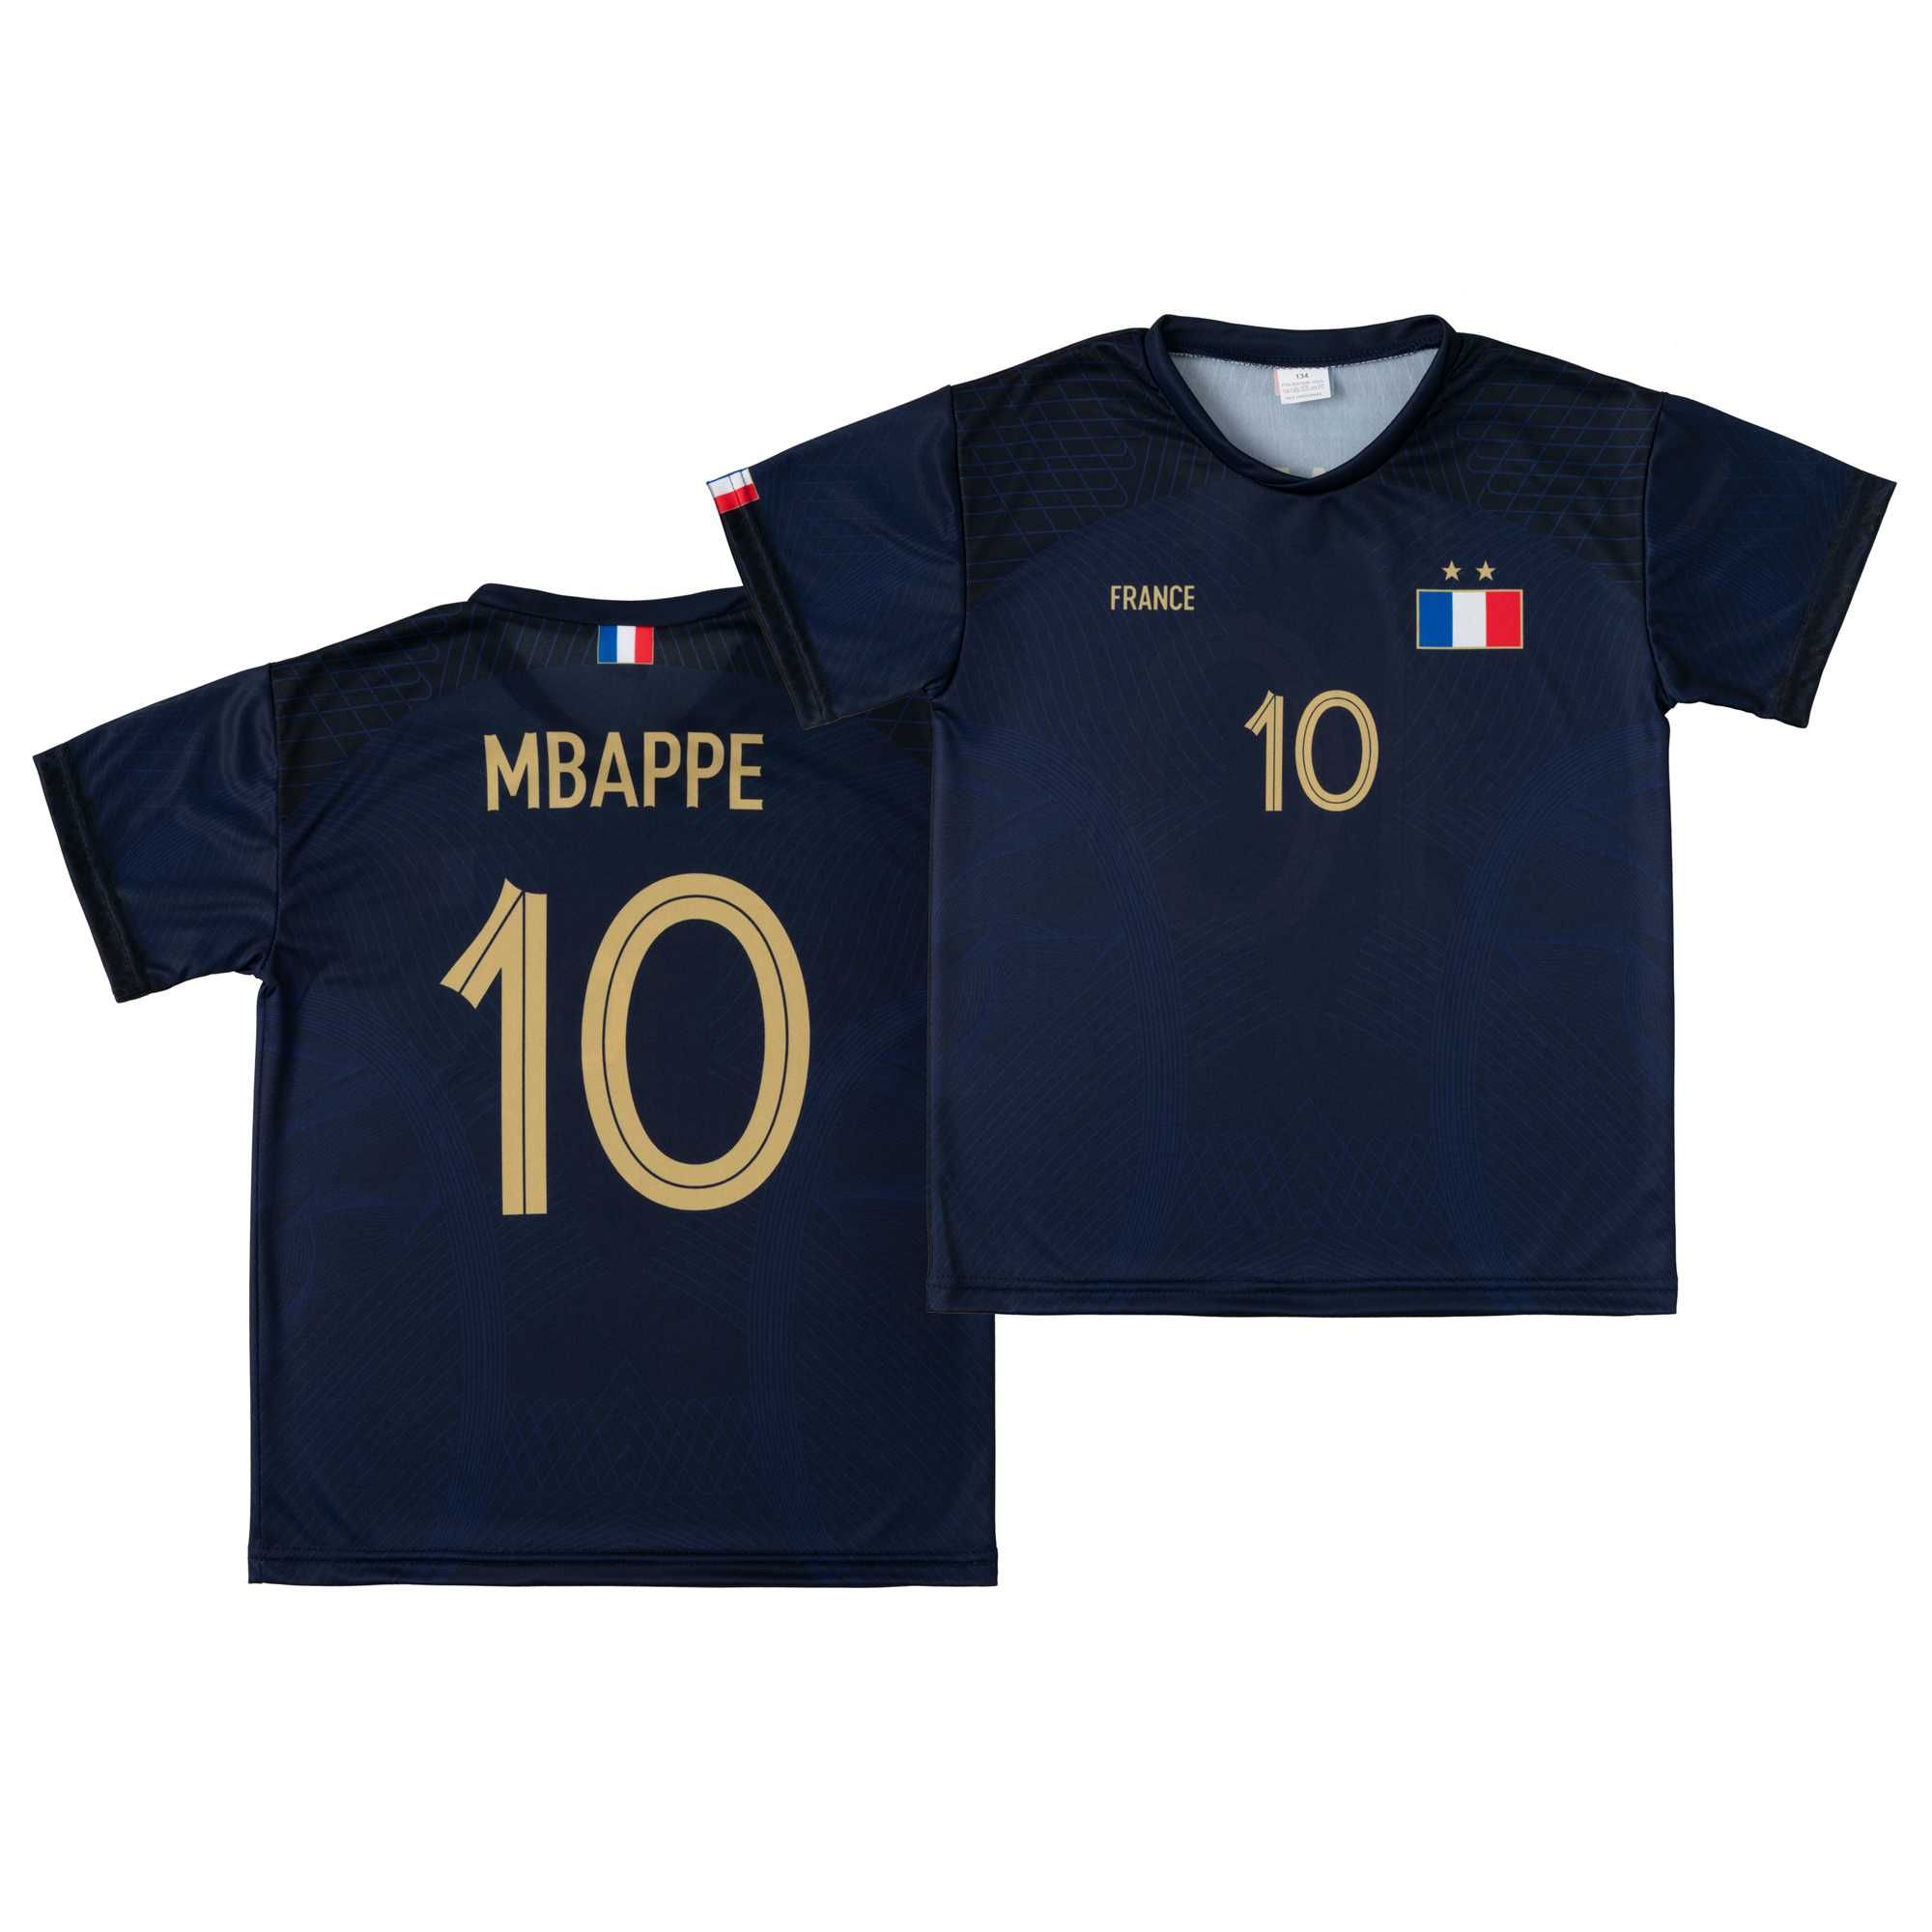 MBAPPE FRANCJA 10 Koszulka piłkarska